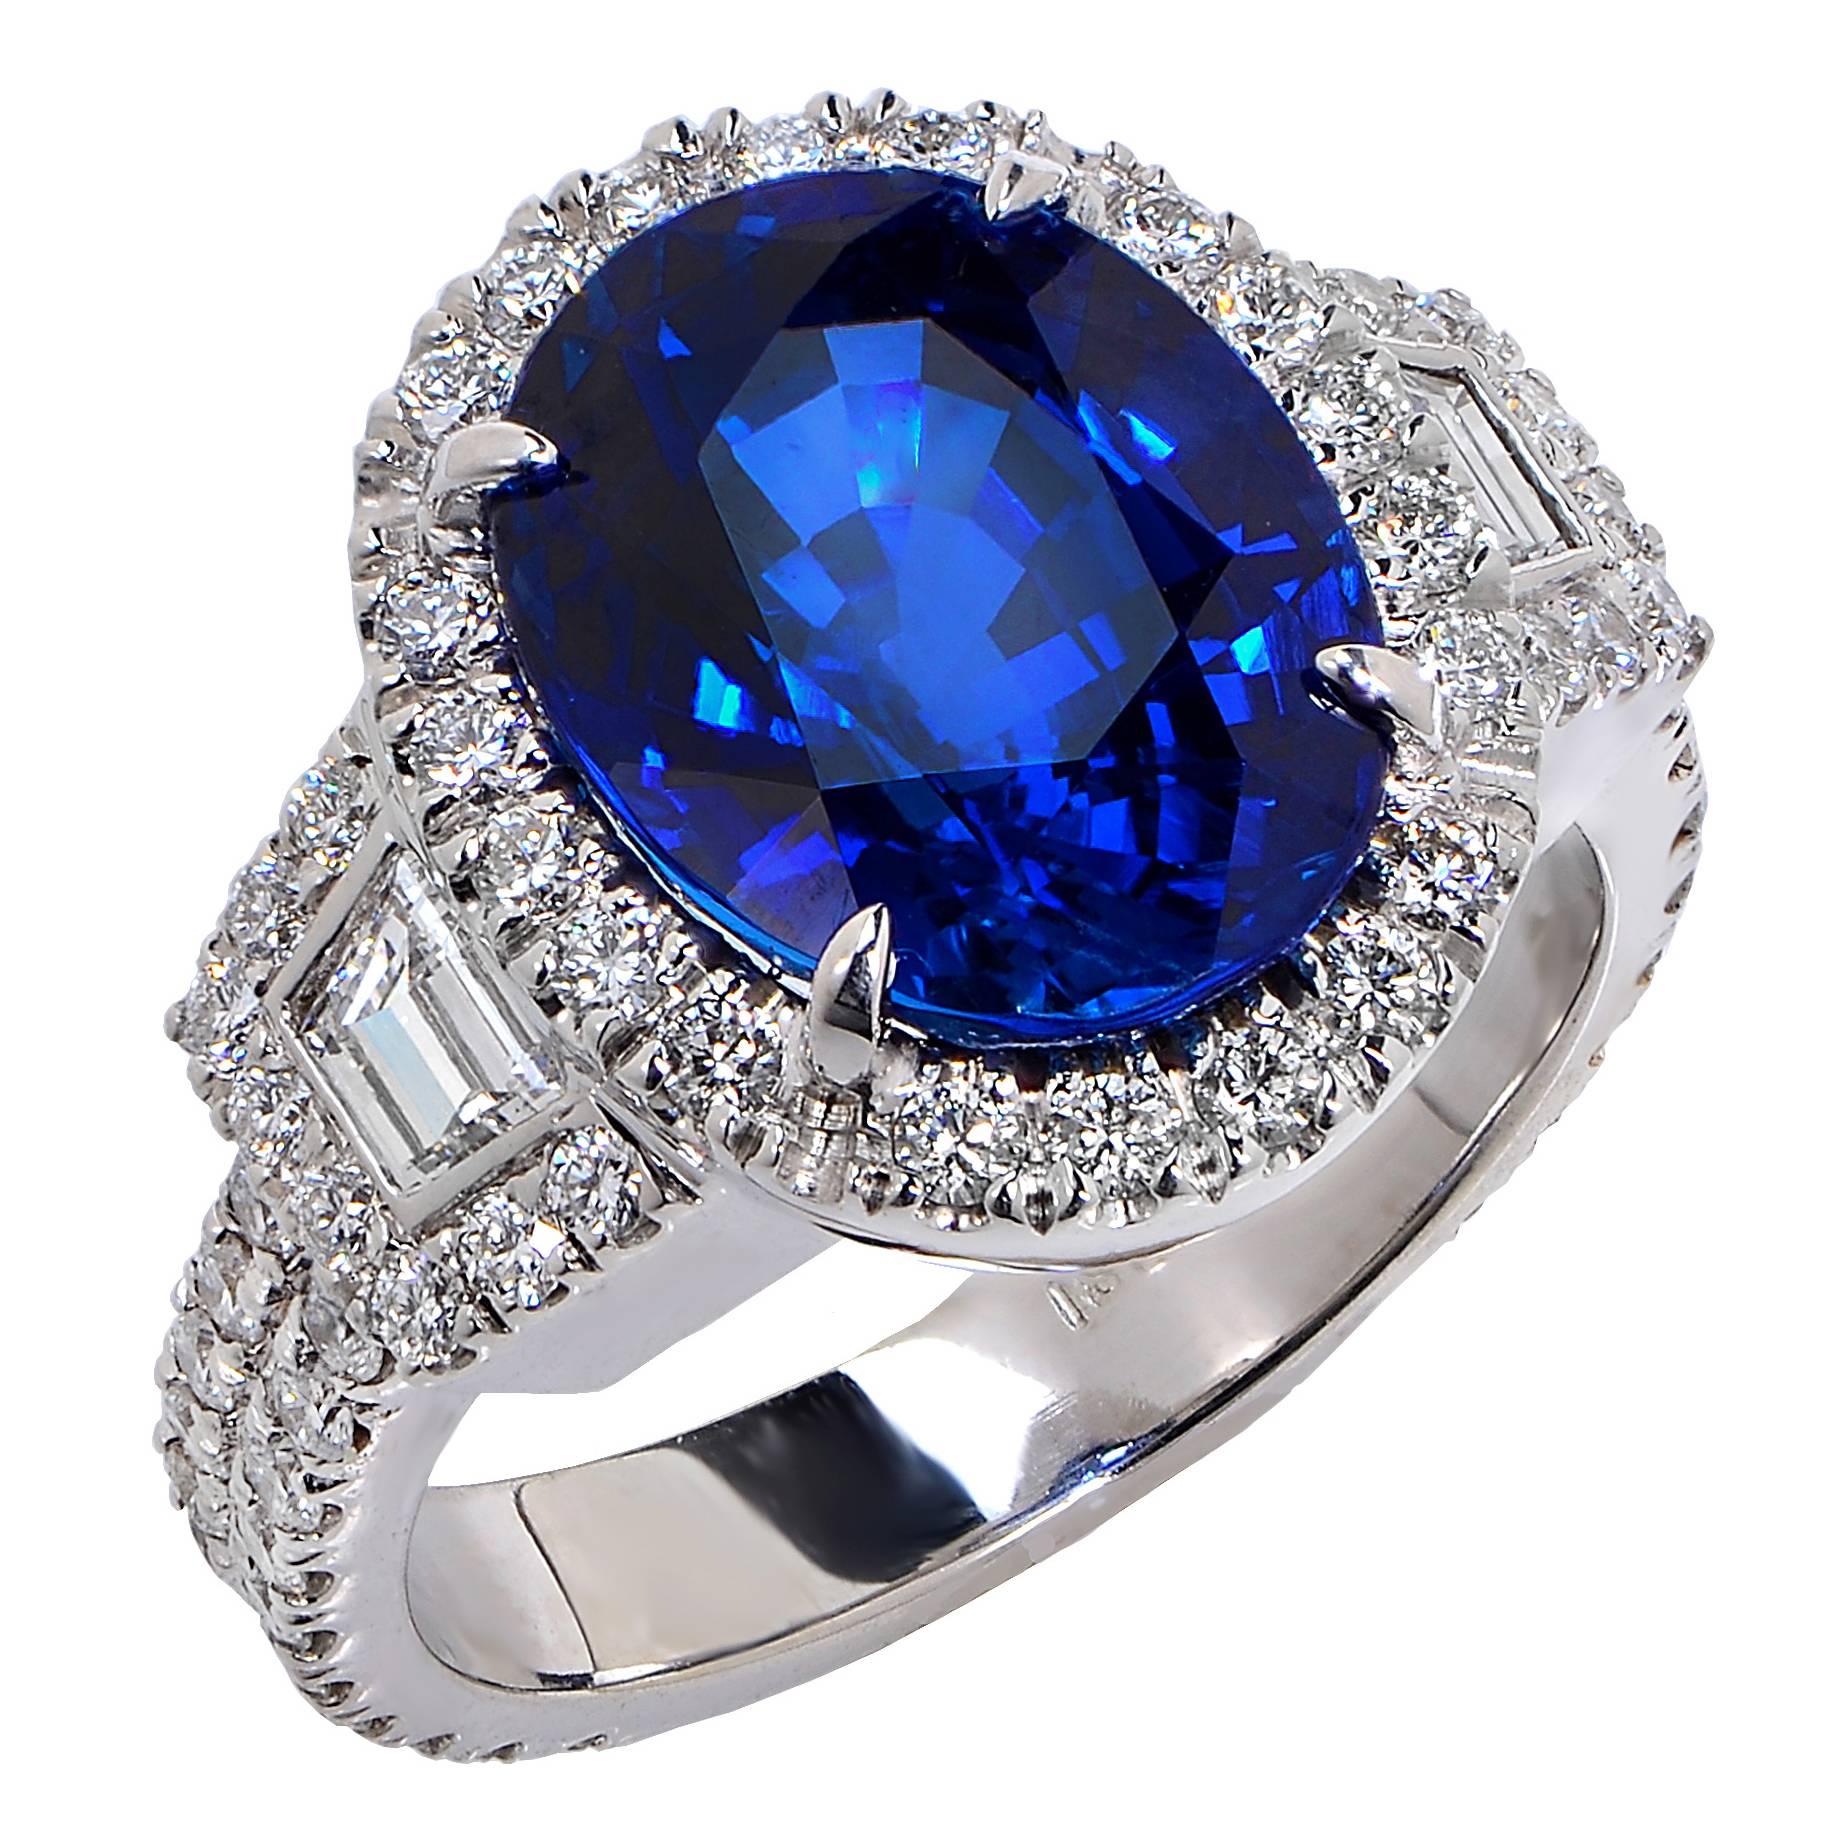 Vivid Diamonds Stunning 6.22 Carat Sapphire Diamond Gold Ring For Sale